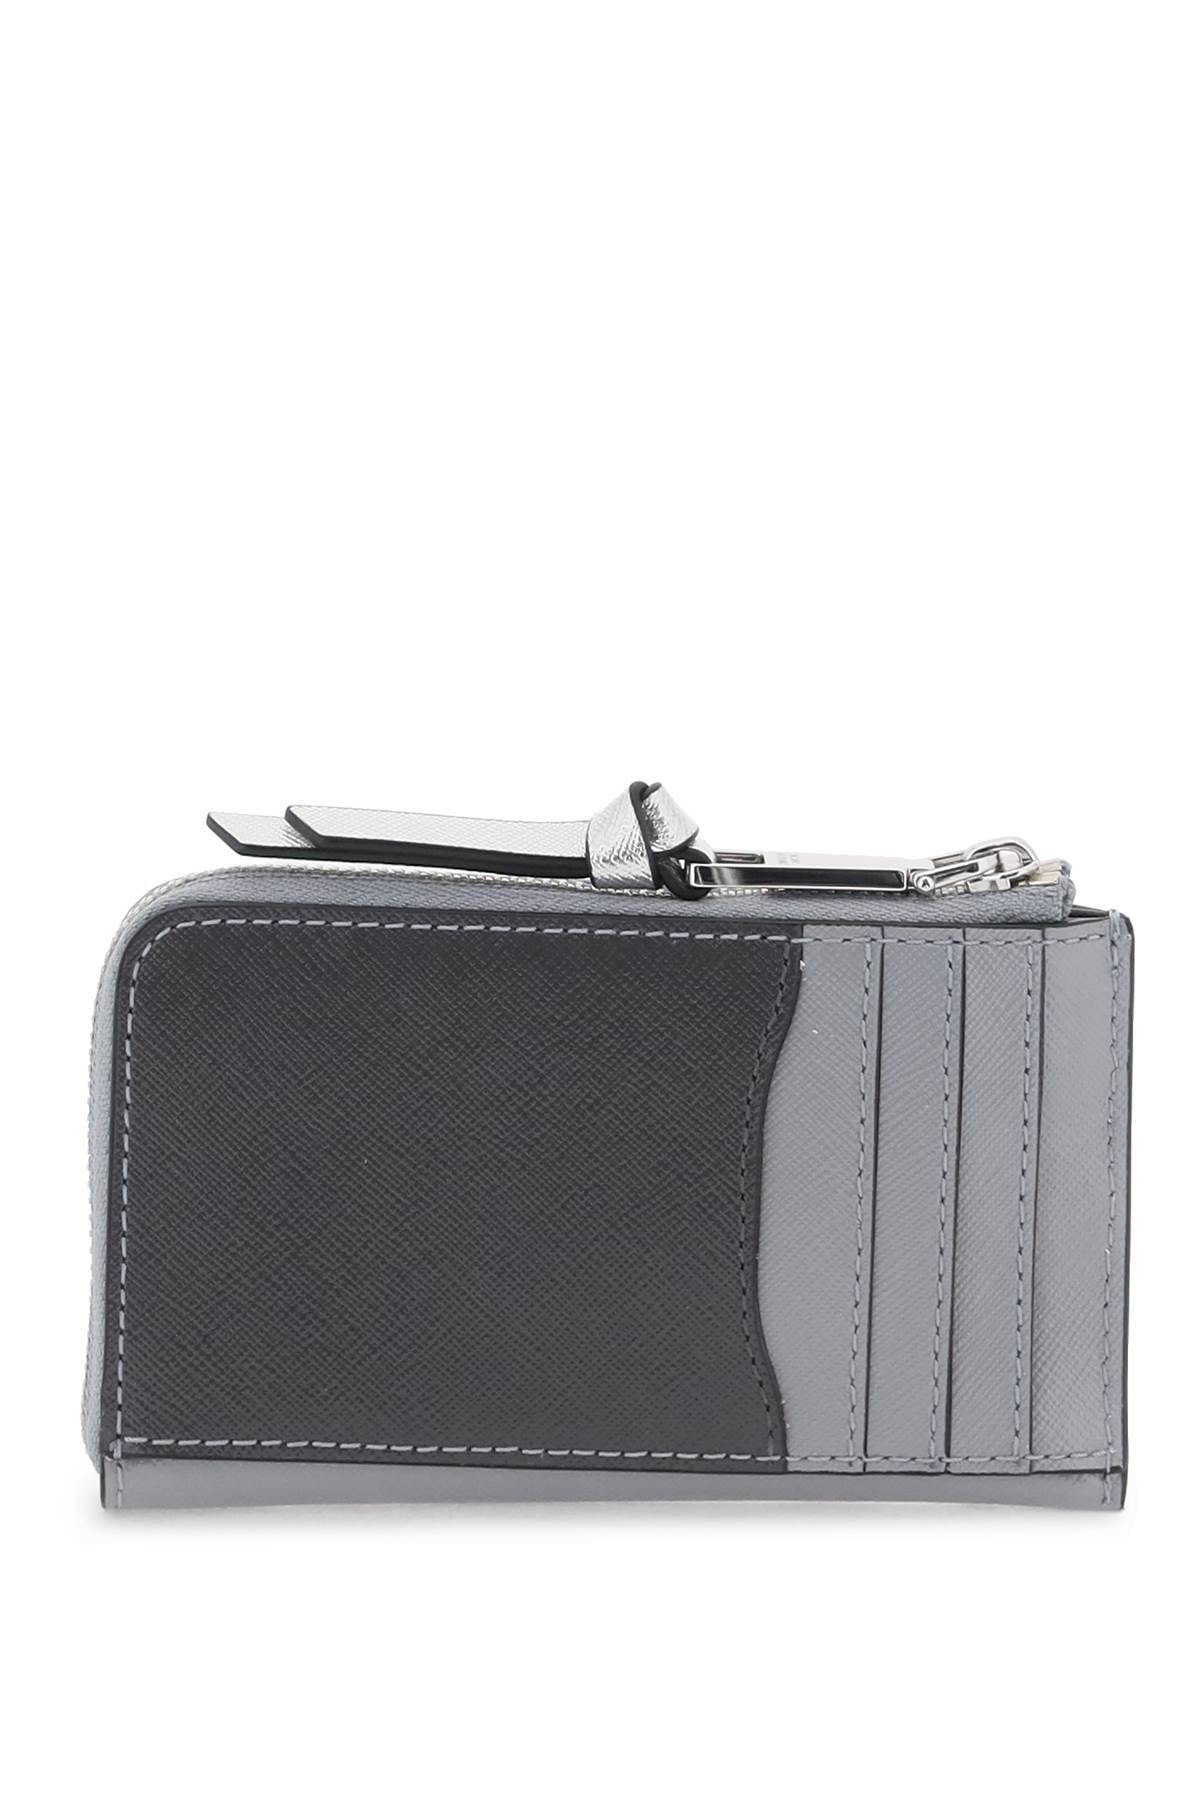 Marc Jacobs The Utility Snapshot Top Zip Multi Wallet   Grey